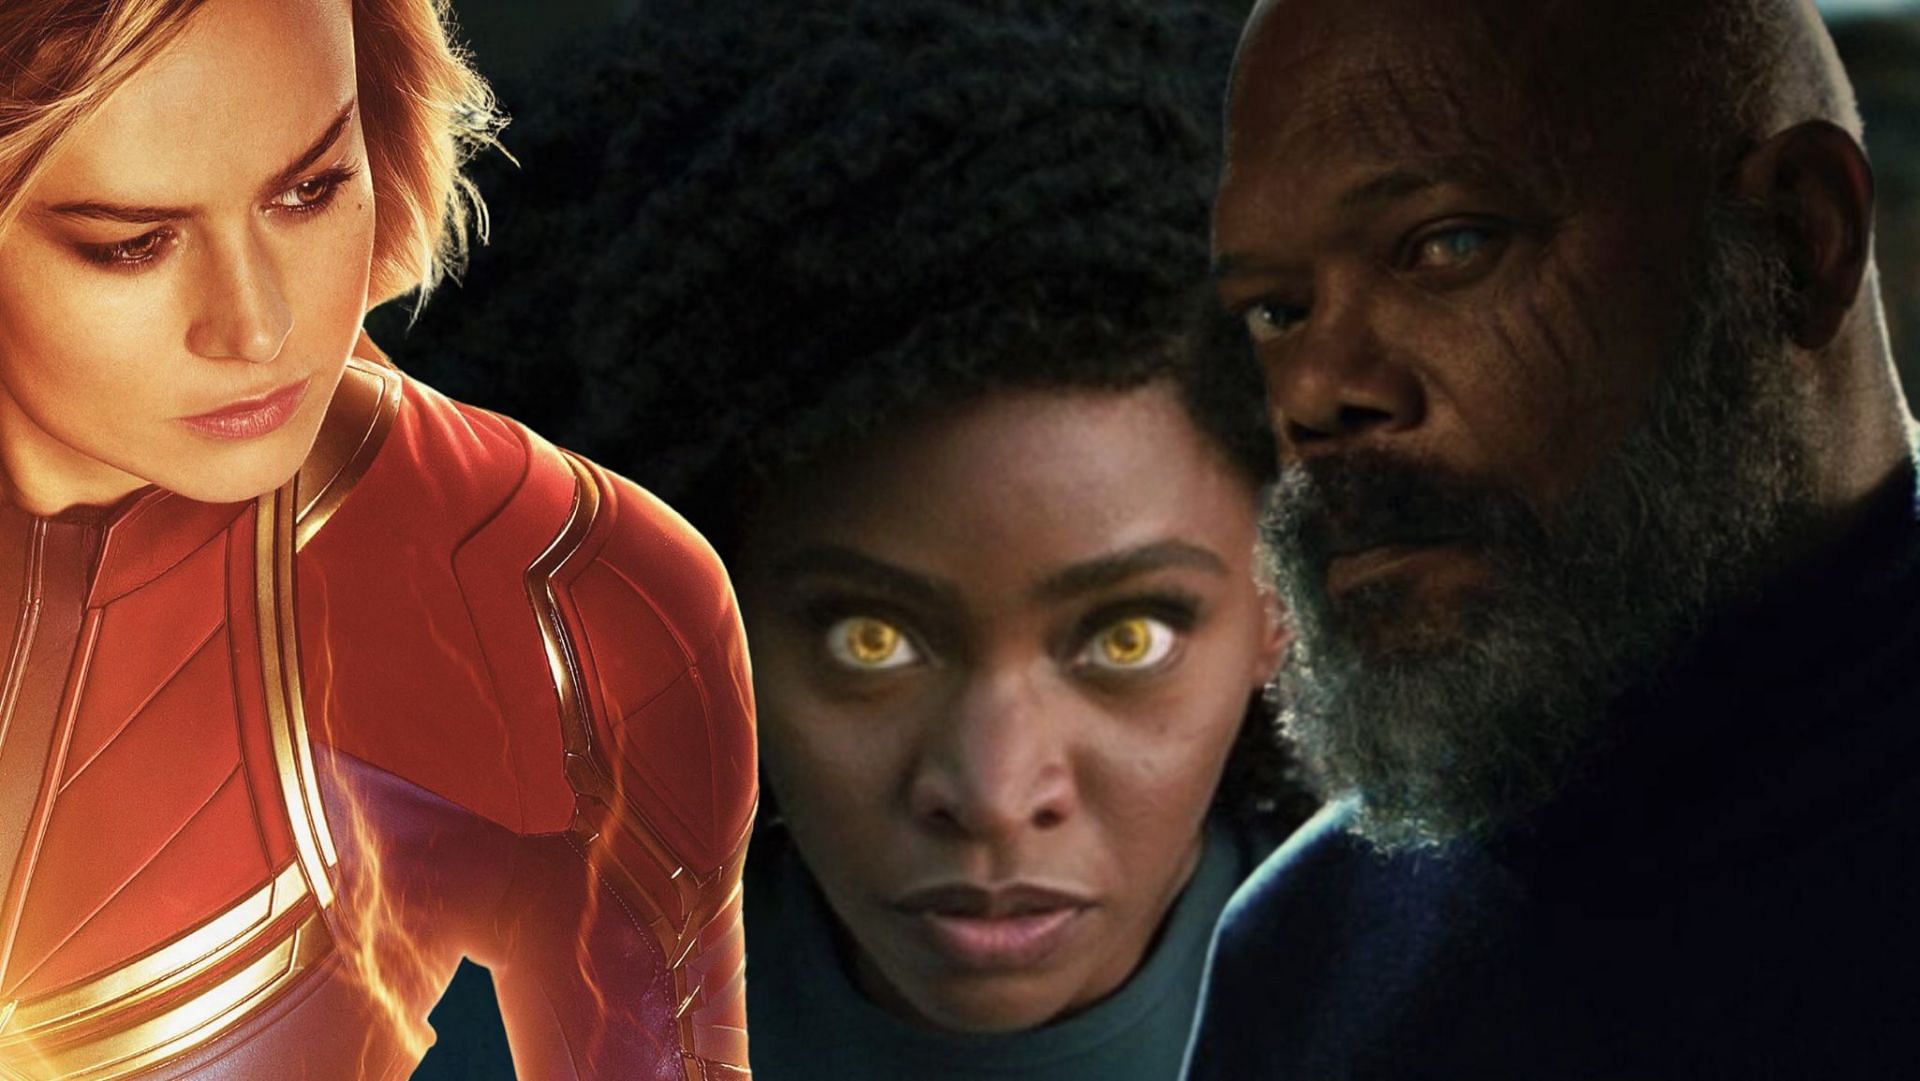 The Marvels: Meet the star-studded cast of Captain Marvel 2